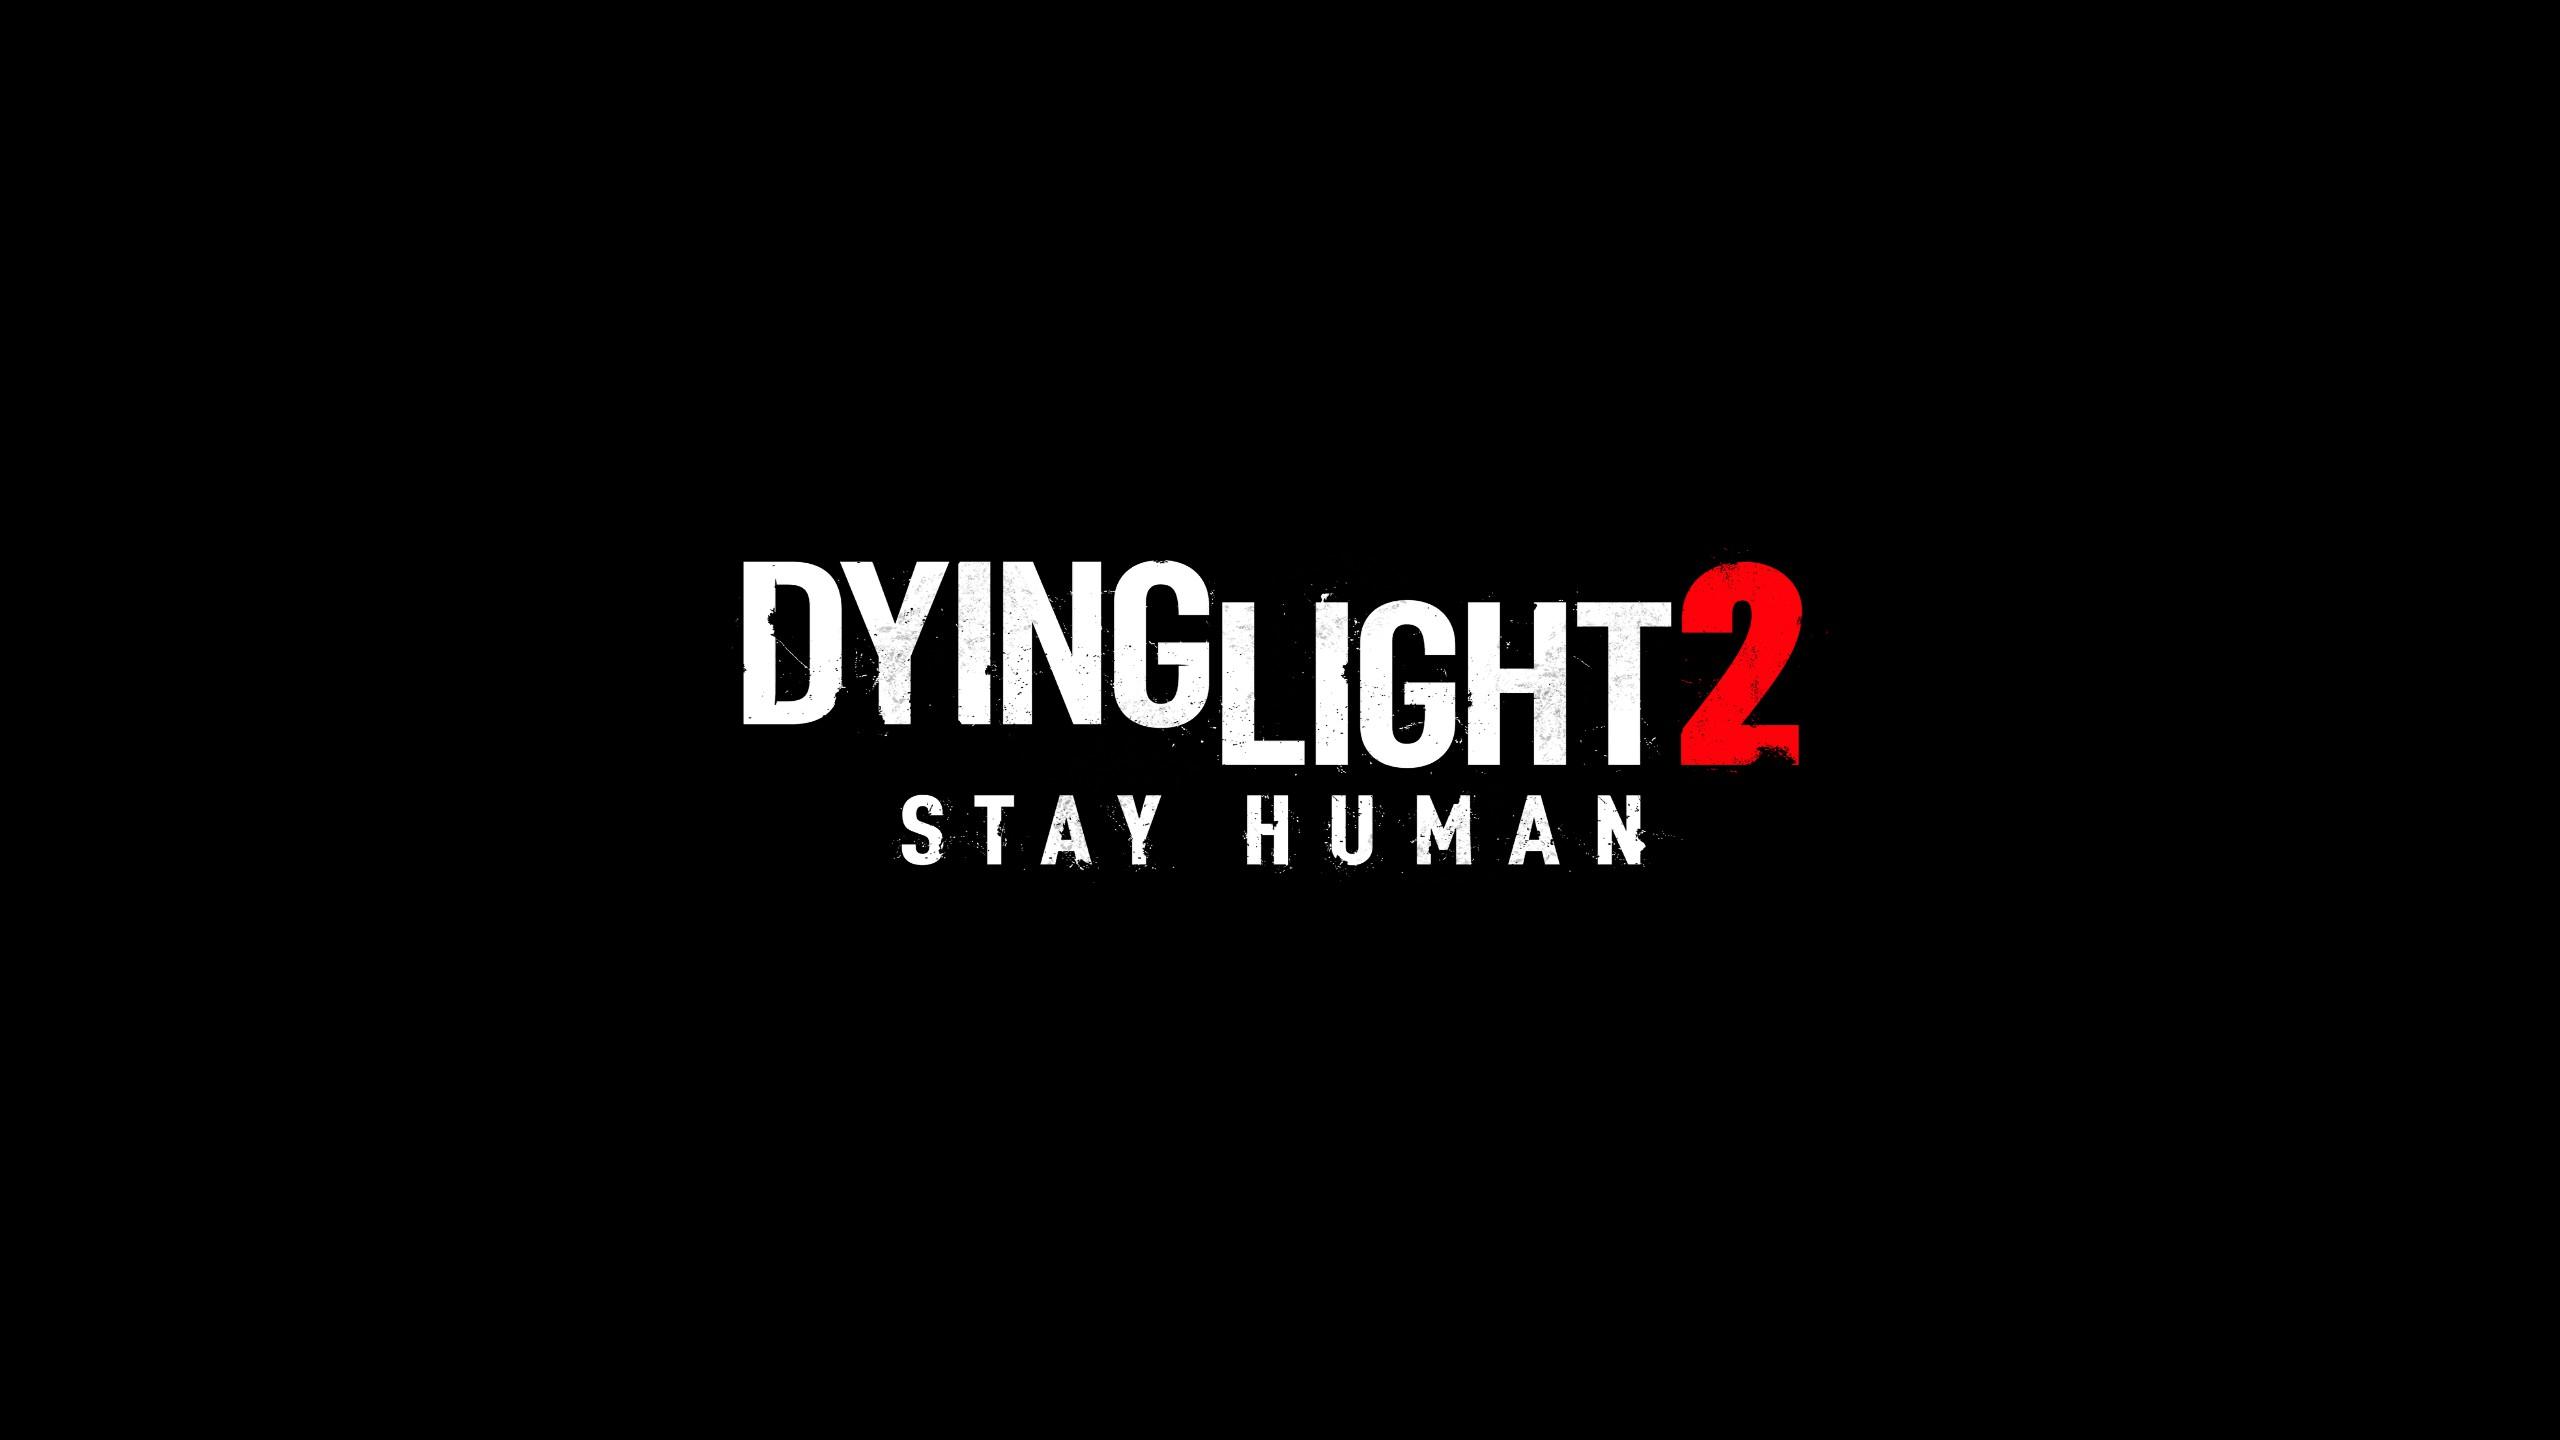 Dying Light 2: Stay Human review: Less talk, more dropkicks